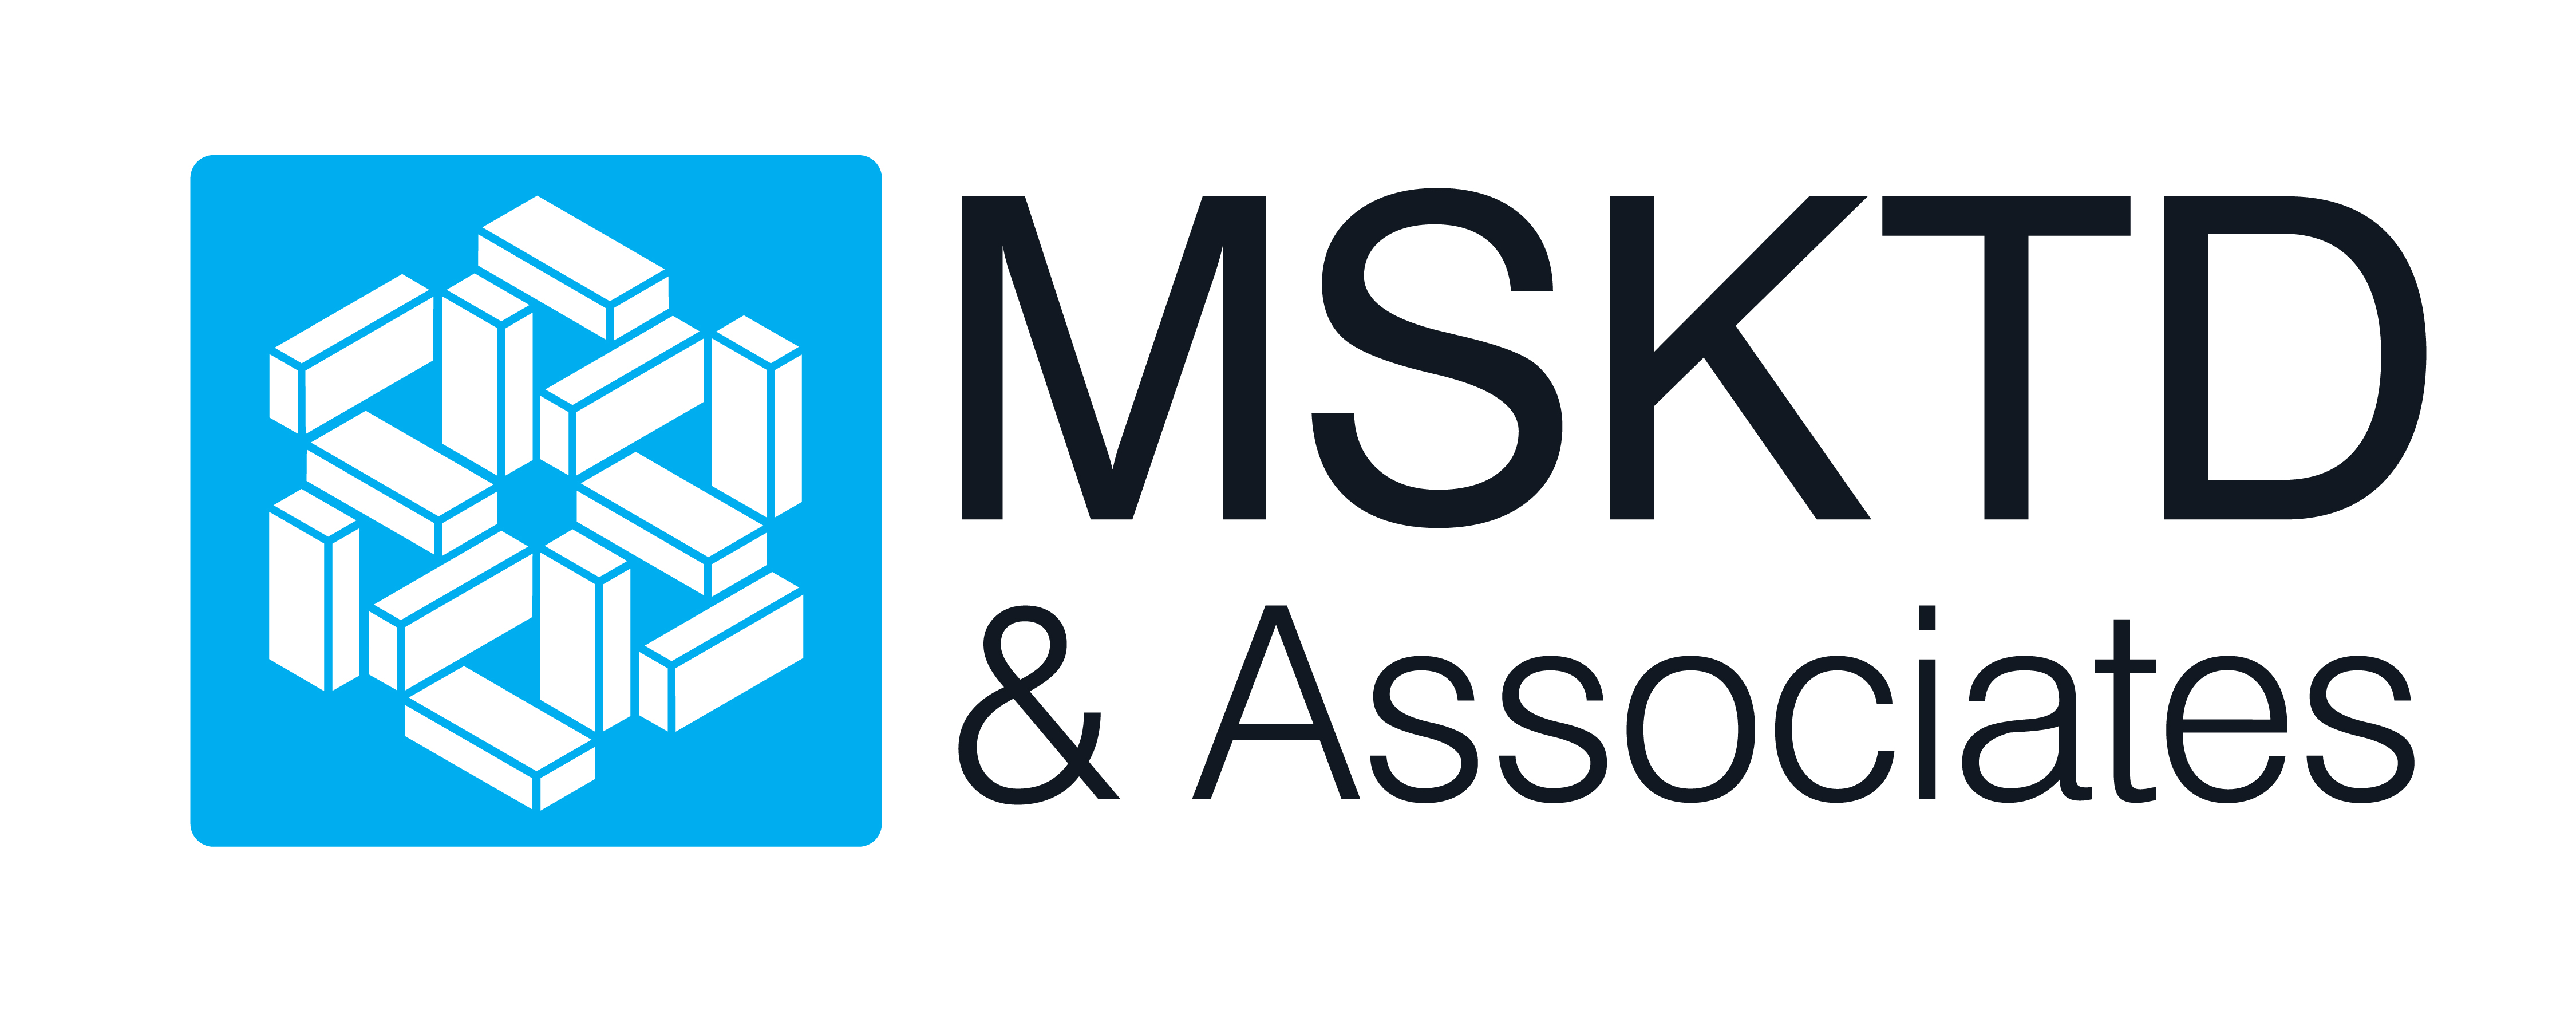 Sponsor - MSKTD & Associates